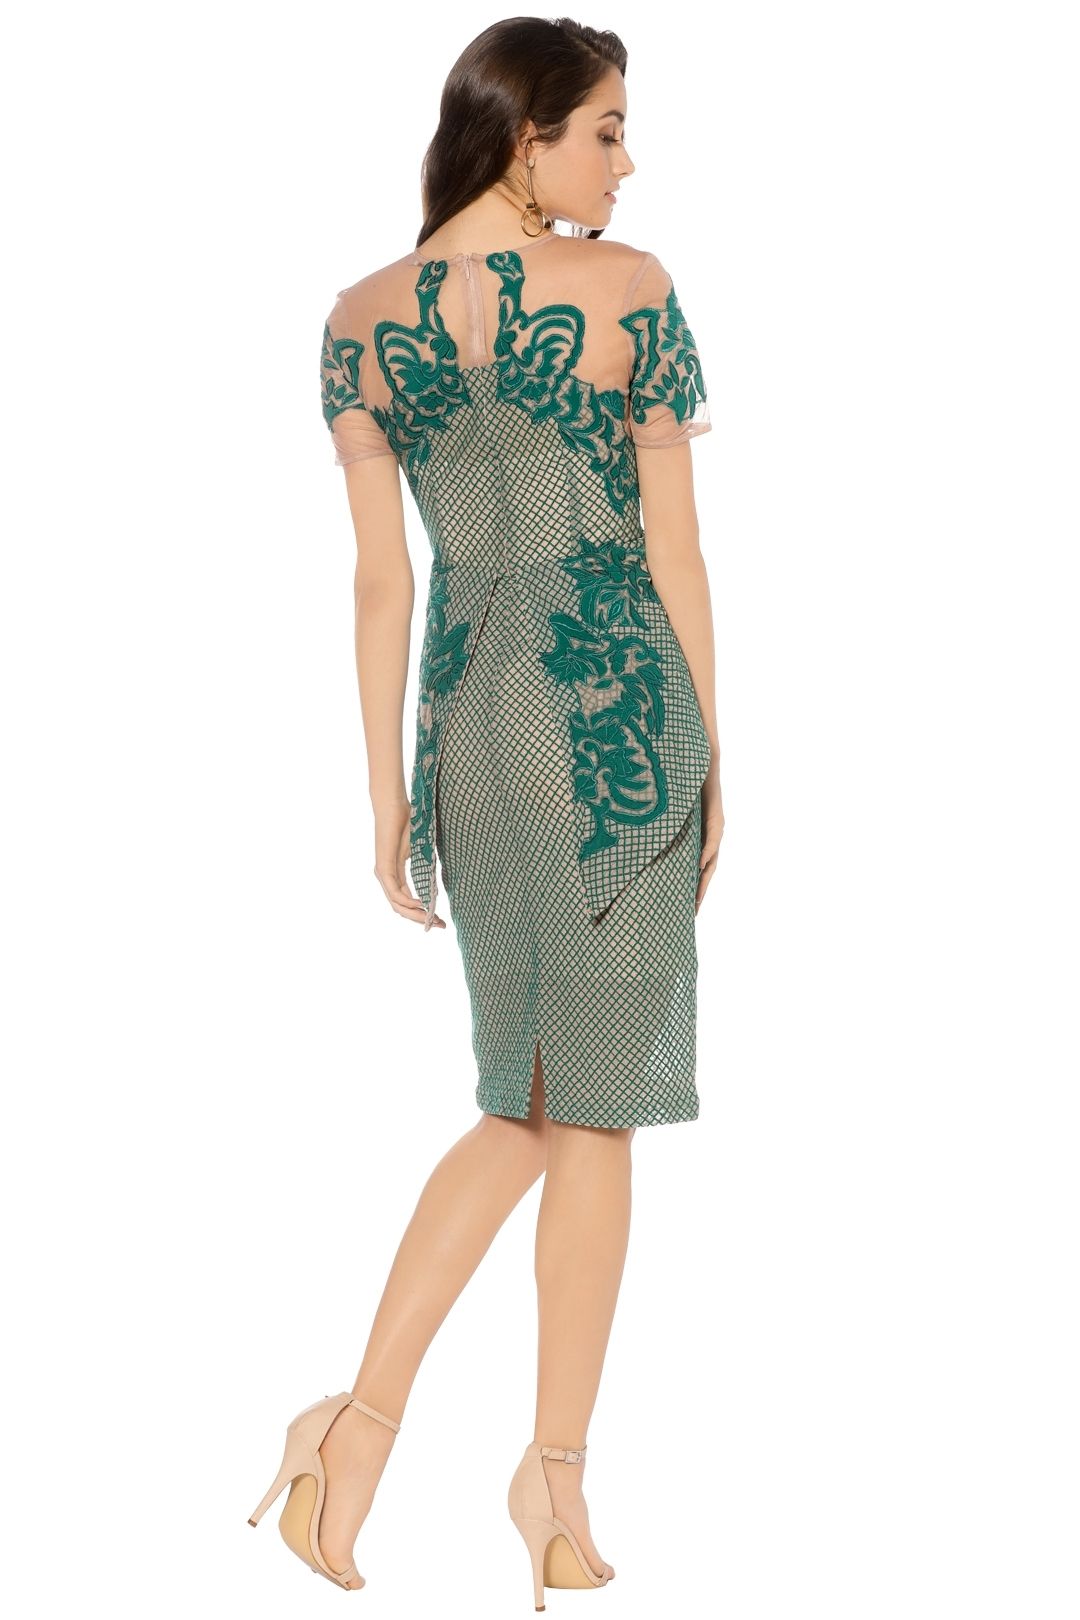 Thurley - Rosetta Stone Dress - Emerald - Back